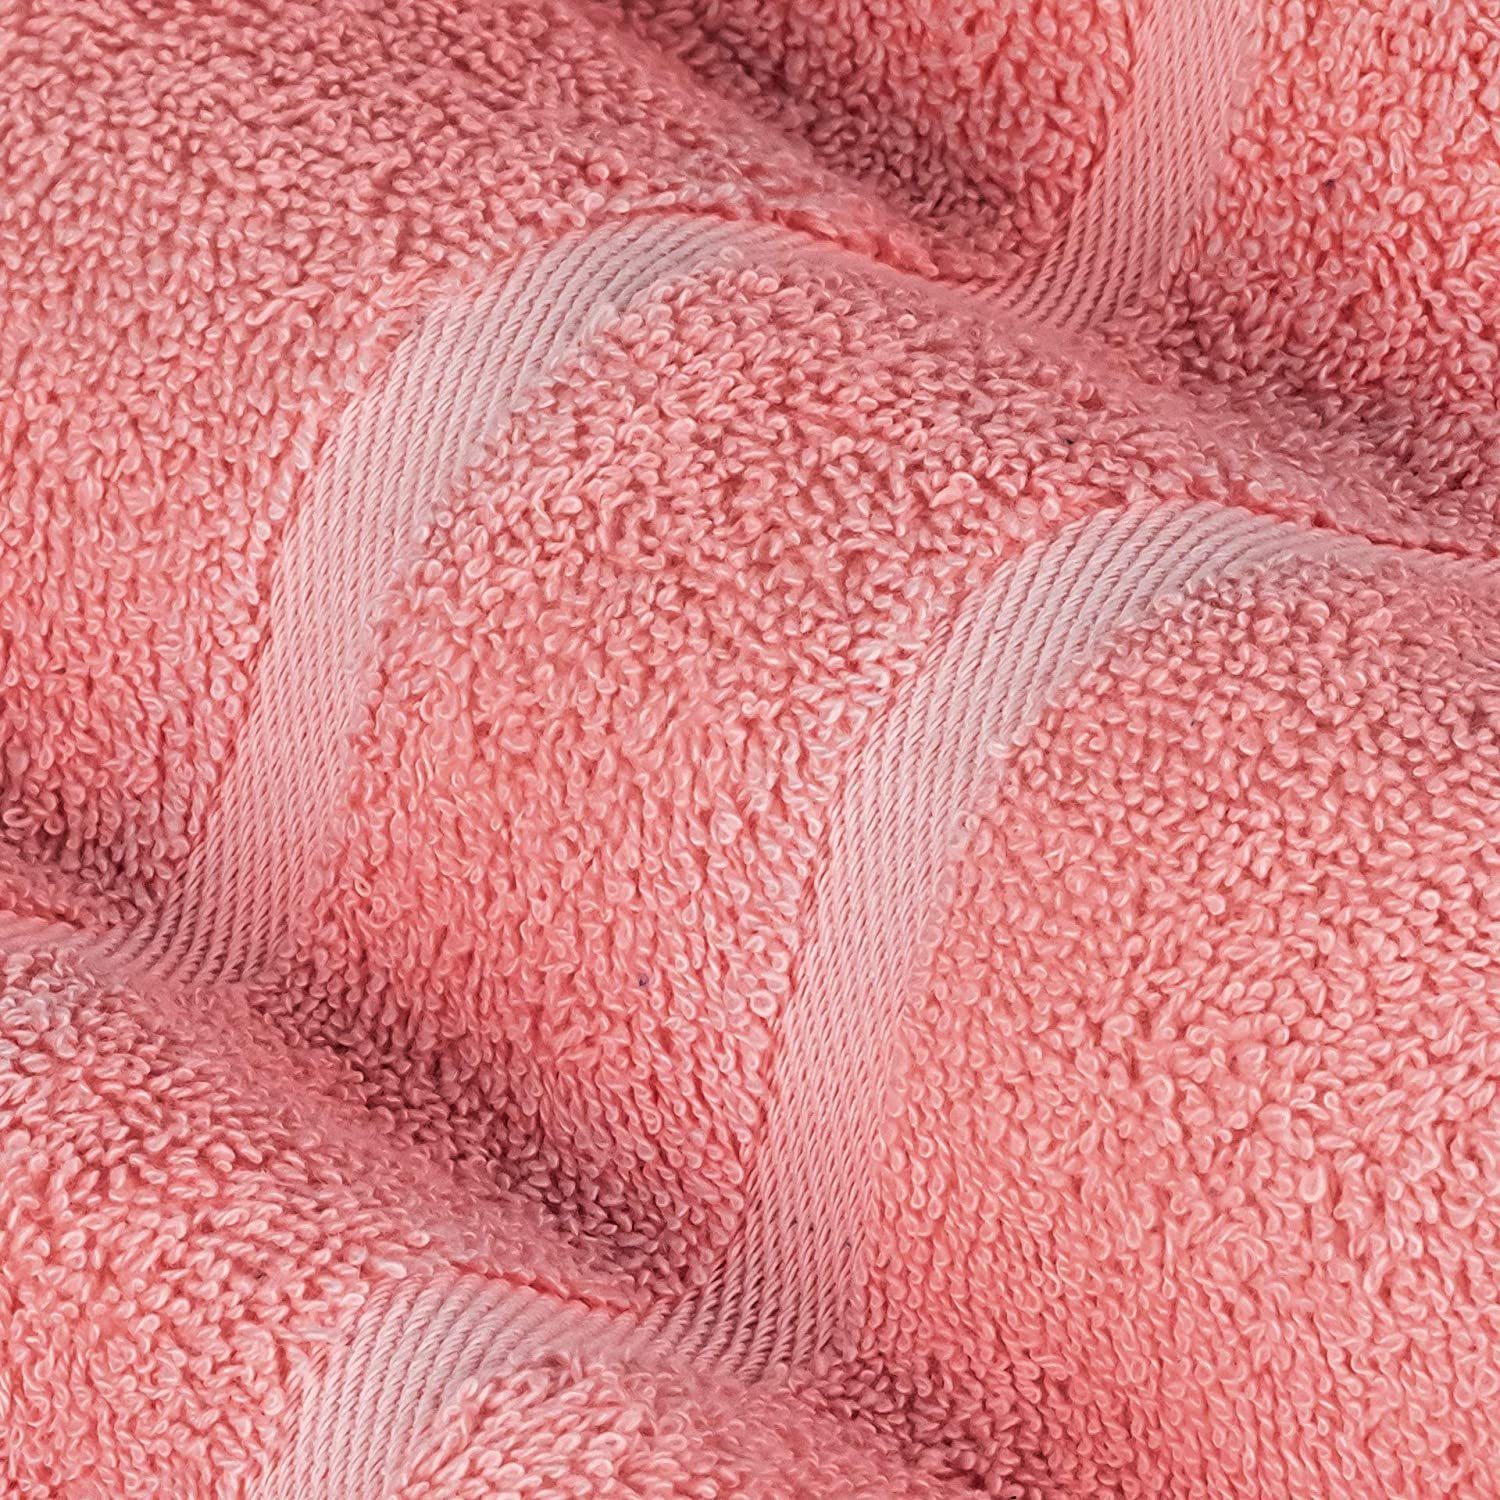 StickandShine Handtuch Handtücher Badetücher Saunatücher 500 Lachs in GSM 100% Gästehandtücher Duschtücher Baumwolle zur Wahl